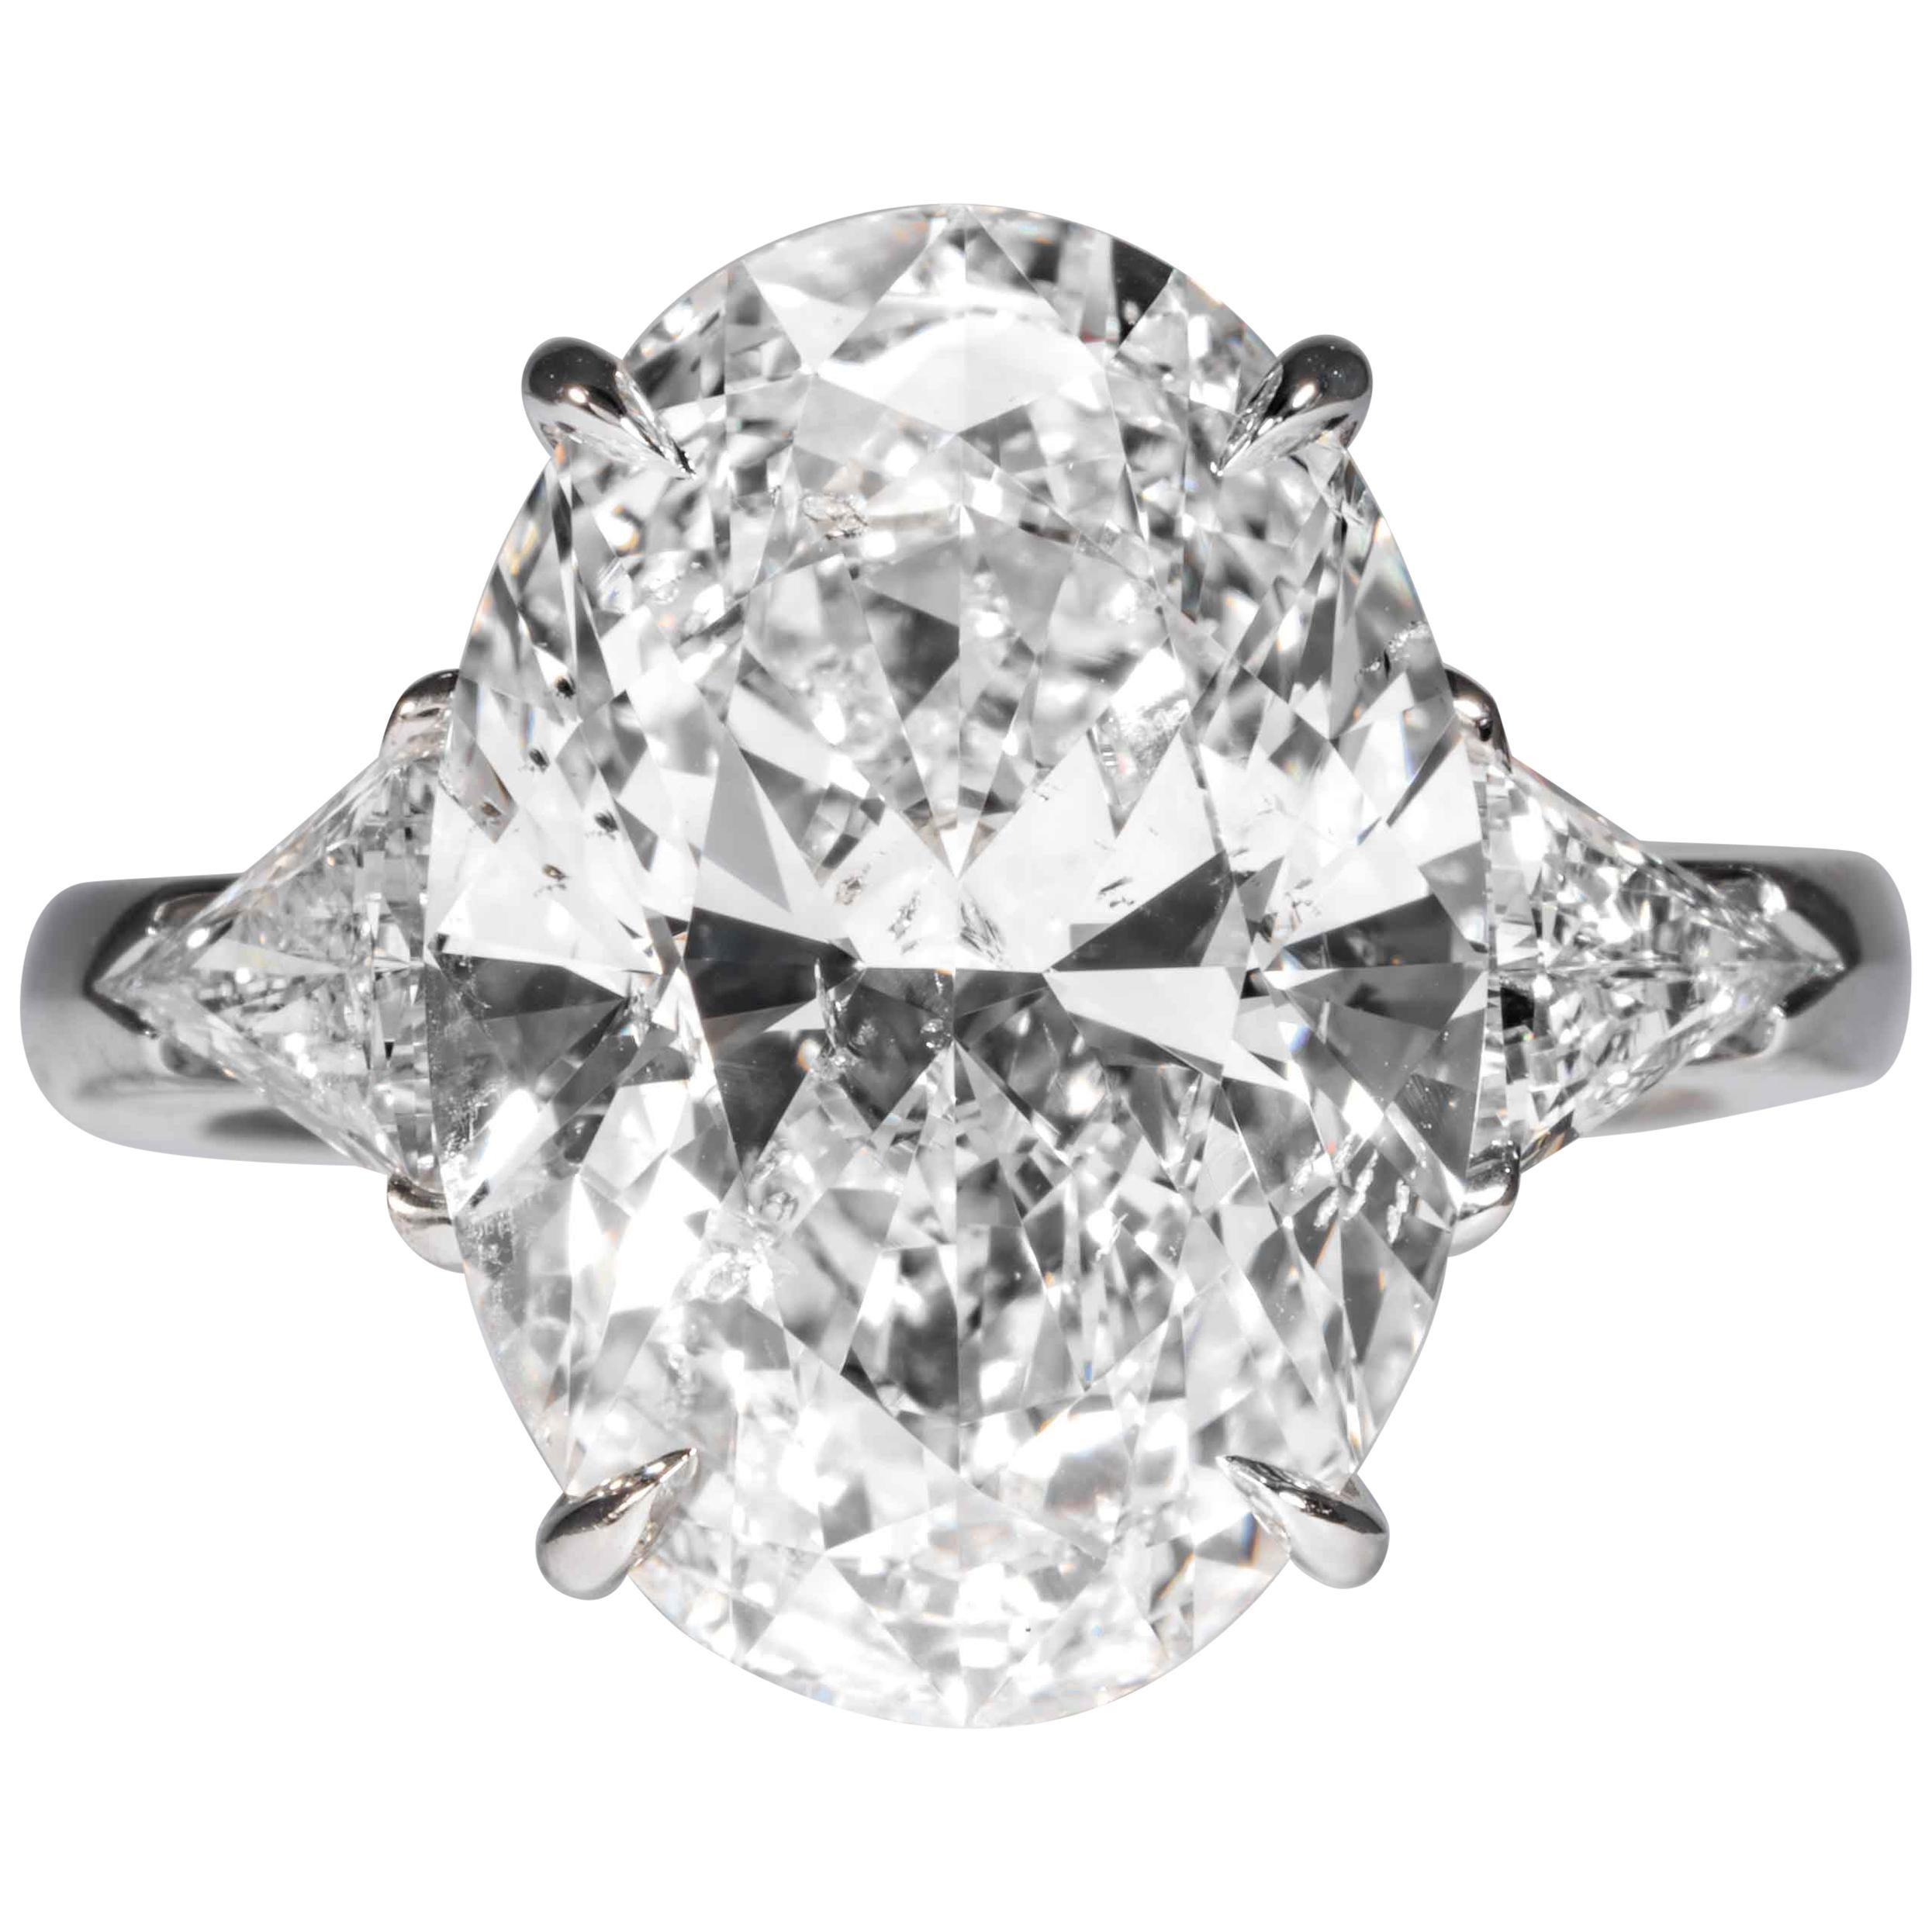 Shreve, Crump & Low GIA Certified 9.08 Carat F SI2 Oval Cut Diamond 3-Stone Ring